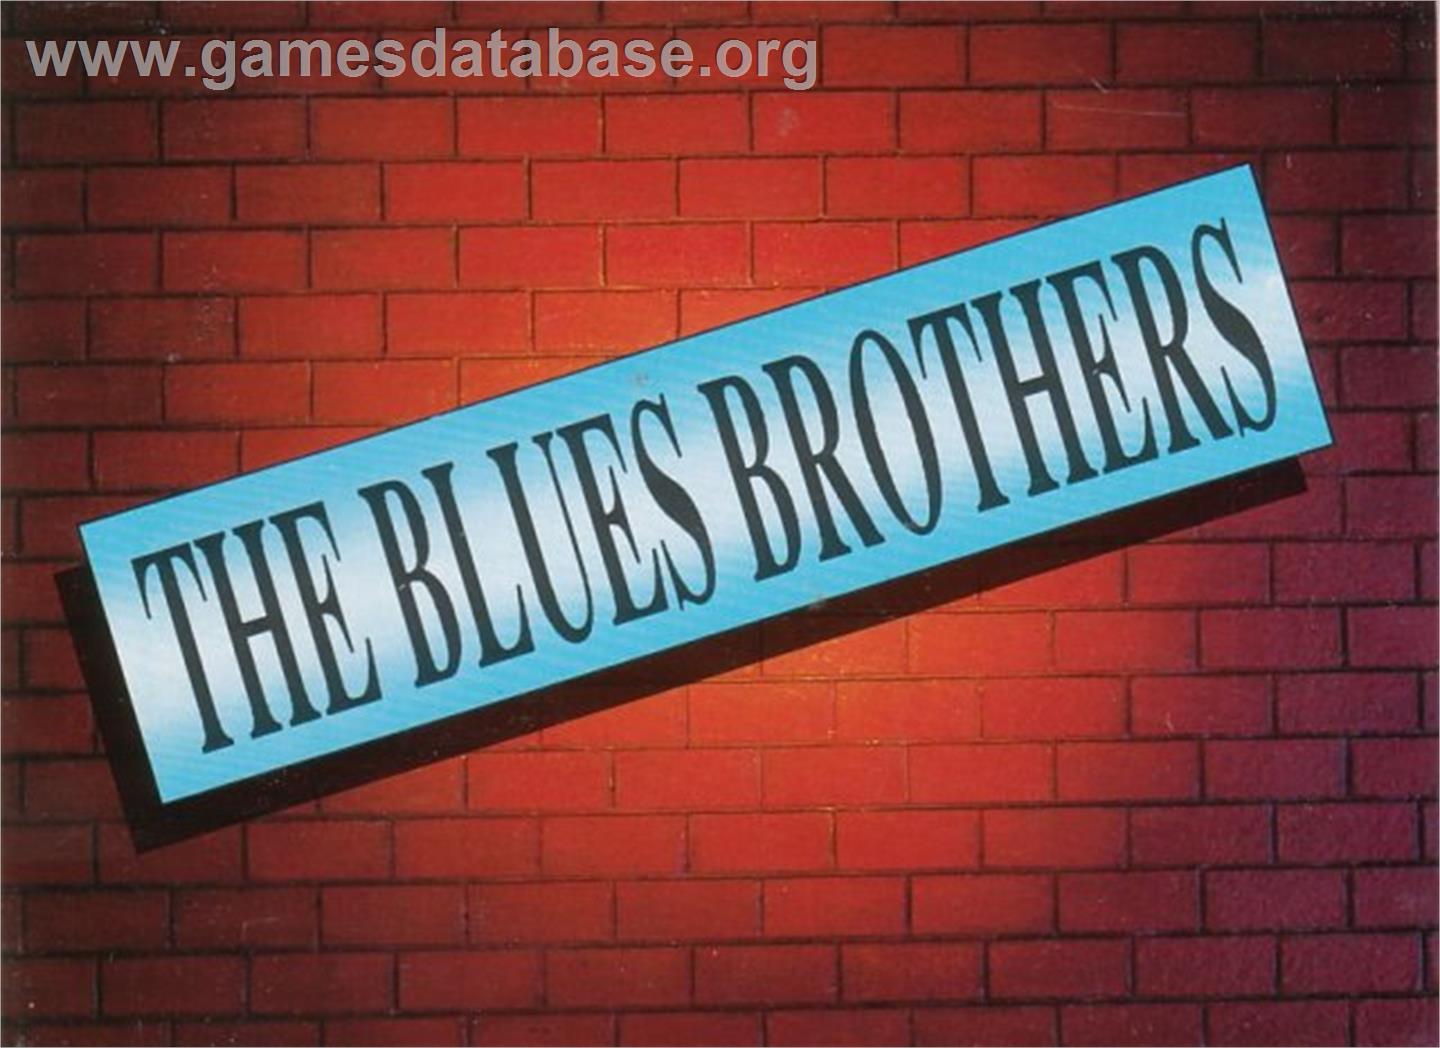 Blues Brothers - Nintendo Game Boy - Artwork - Advert